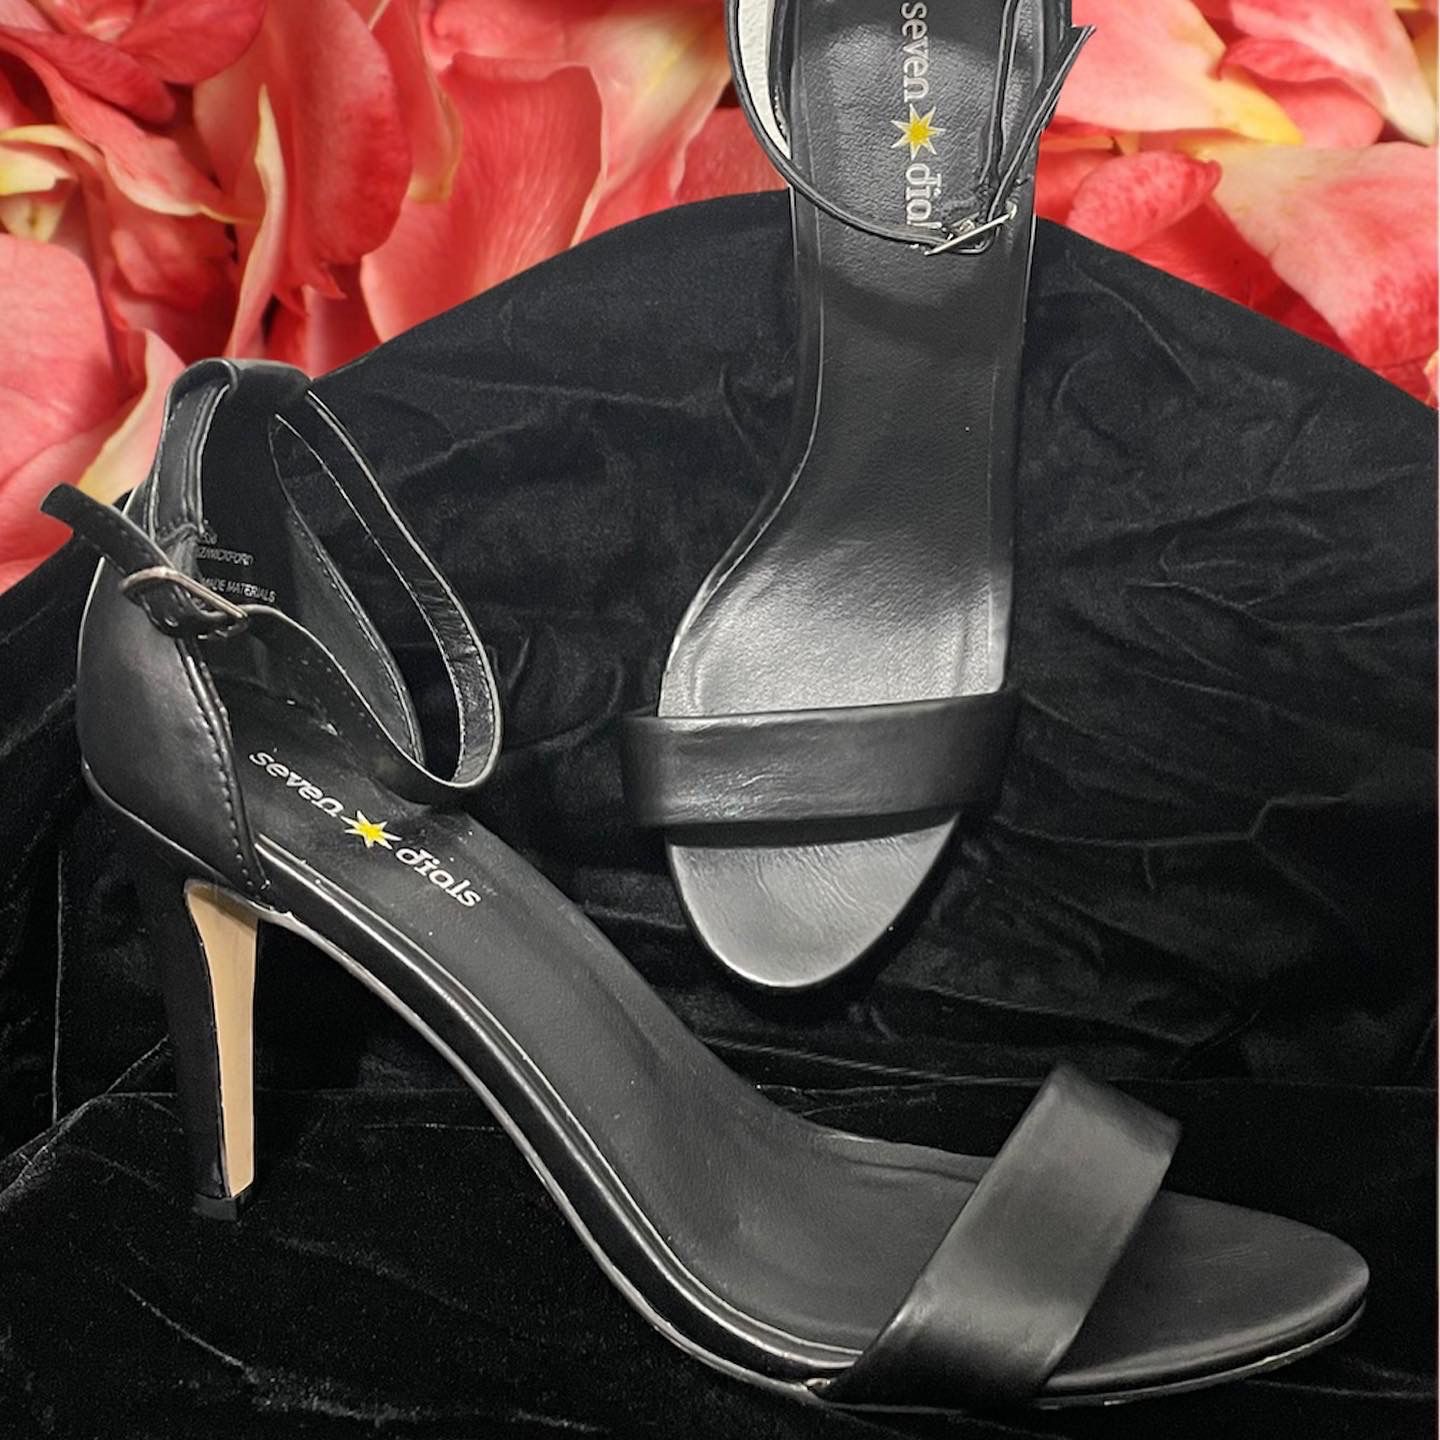 New 🔥 Nuevo   Seven Dials black heels 👠   Only $10